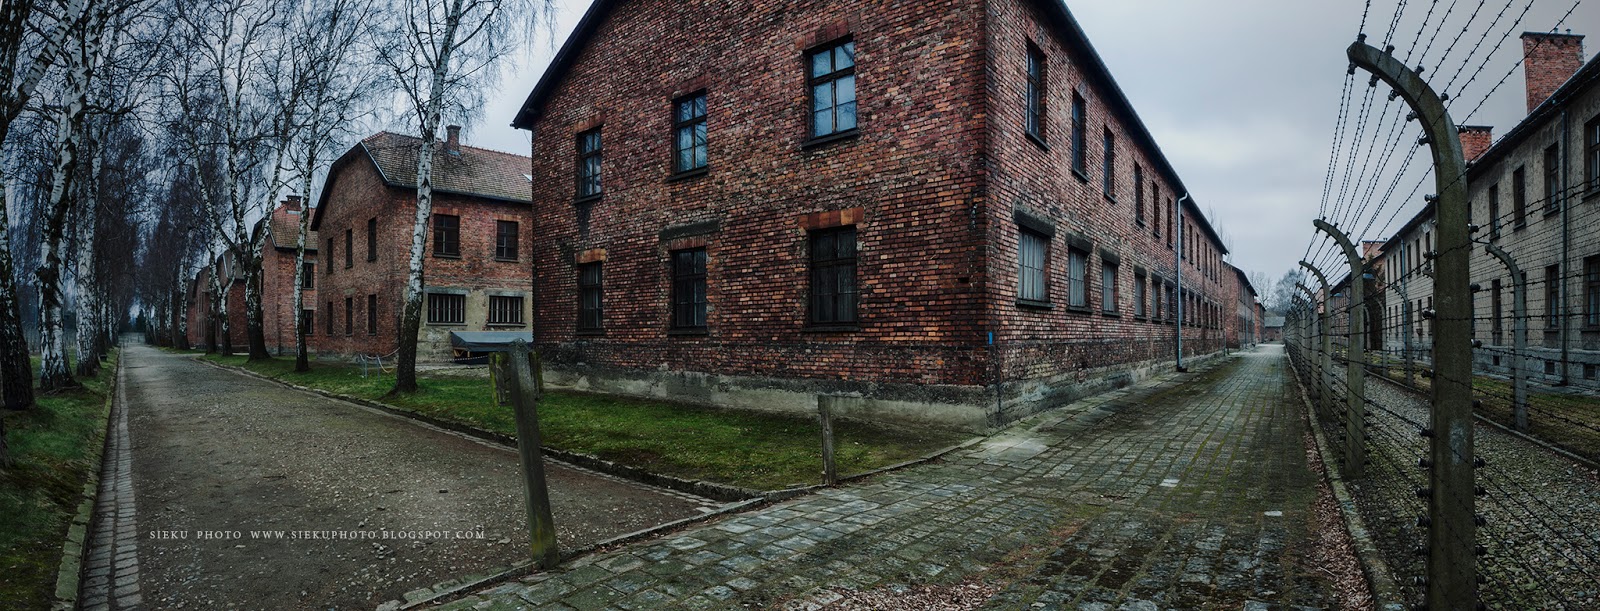 Auschwitz - Birkenau Museum